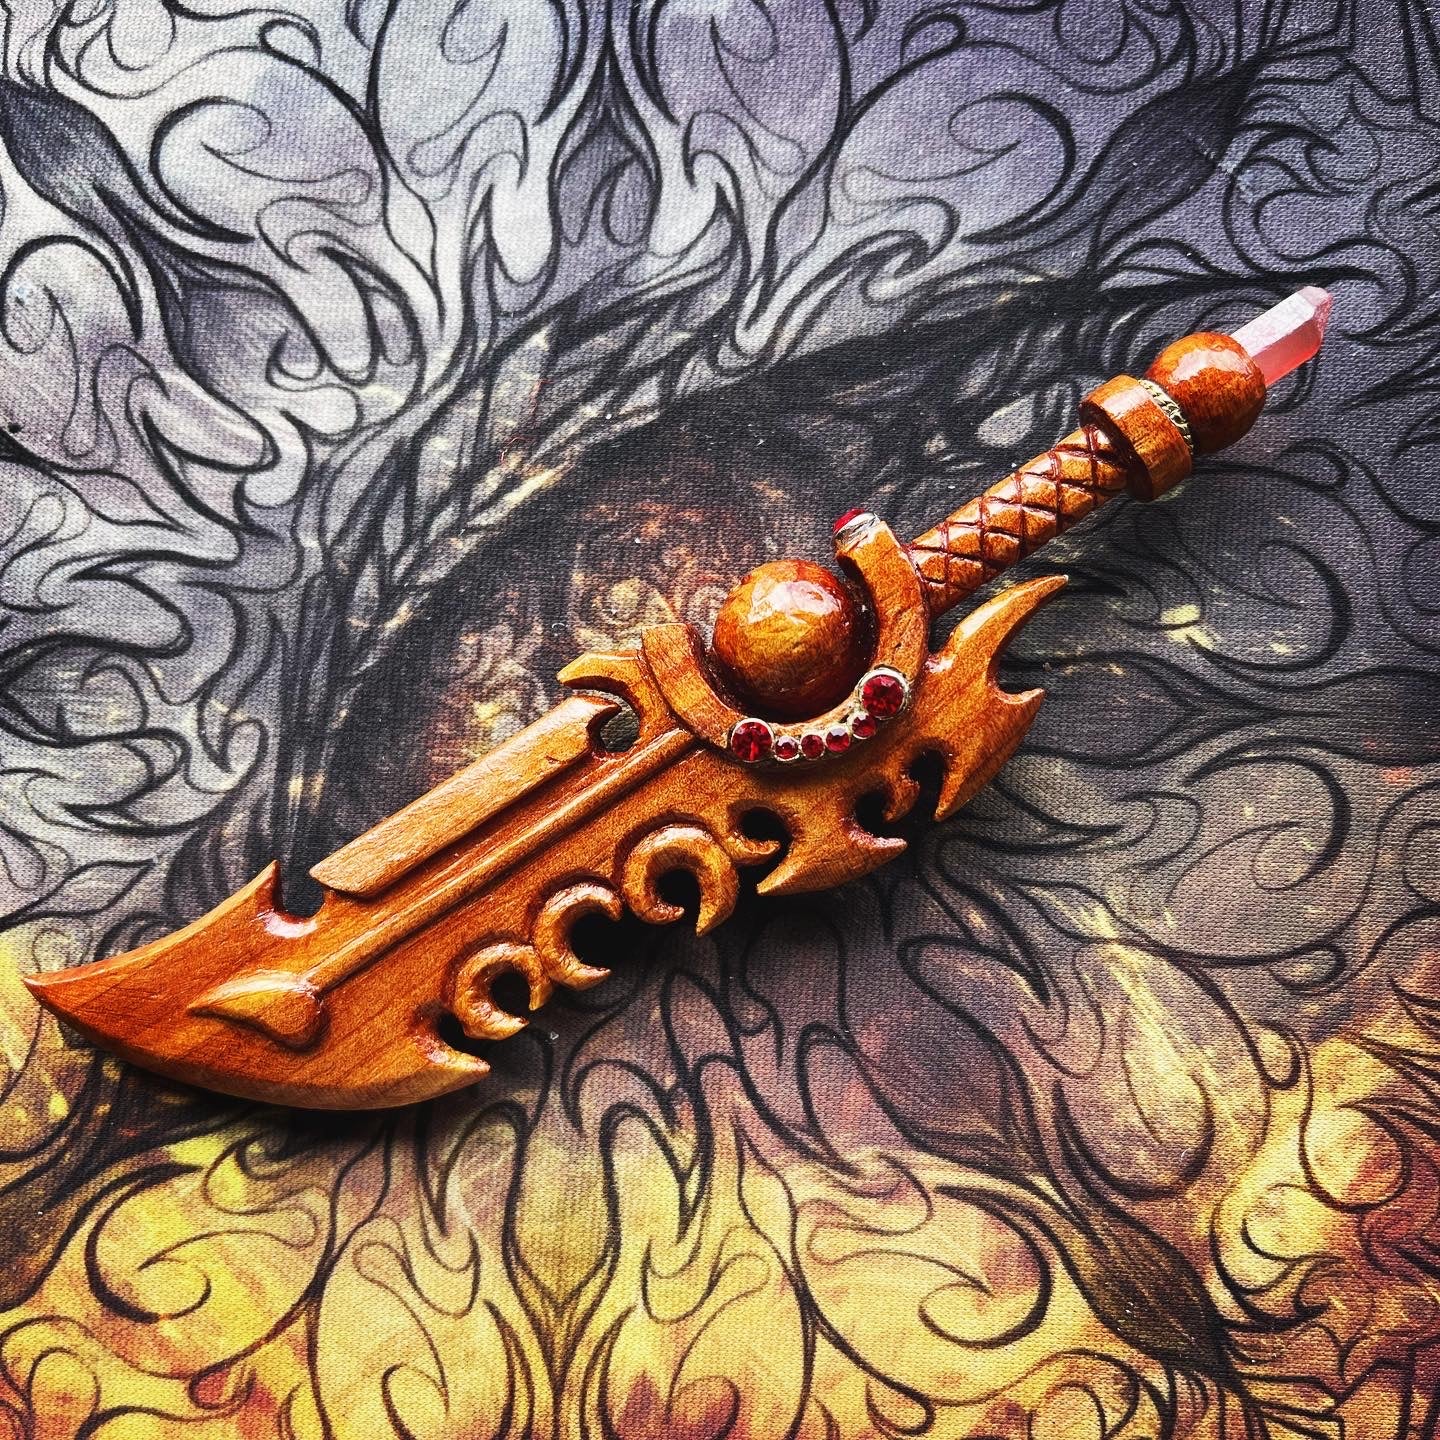 epic handmade sword